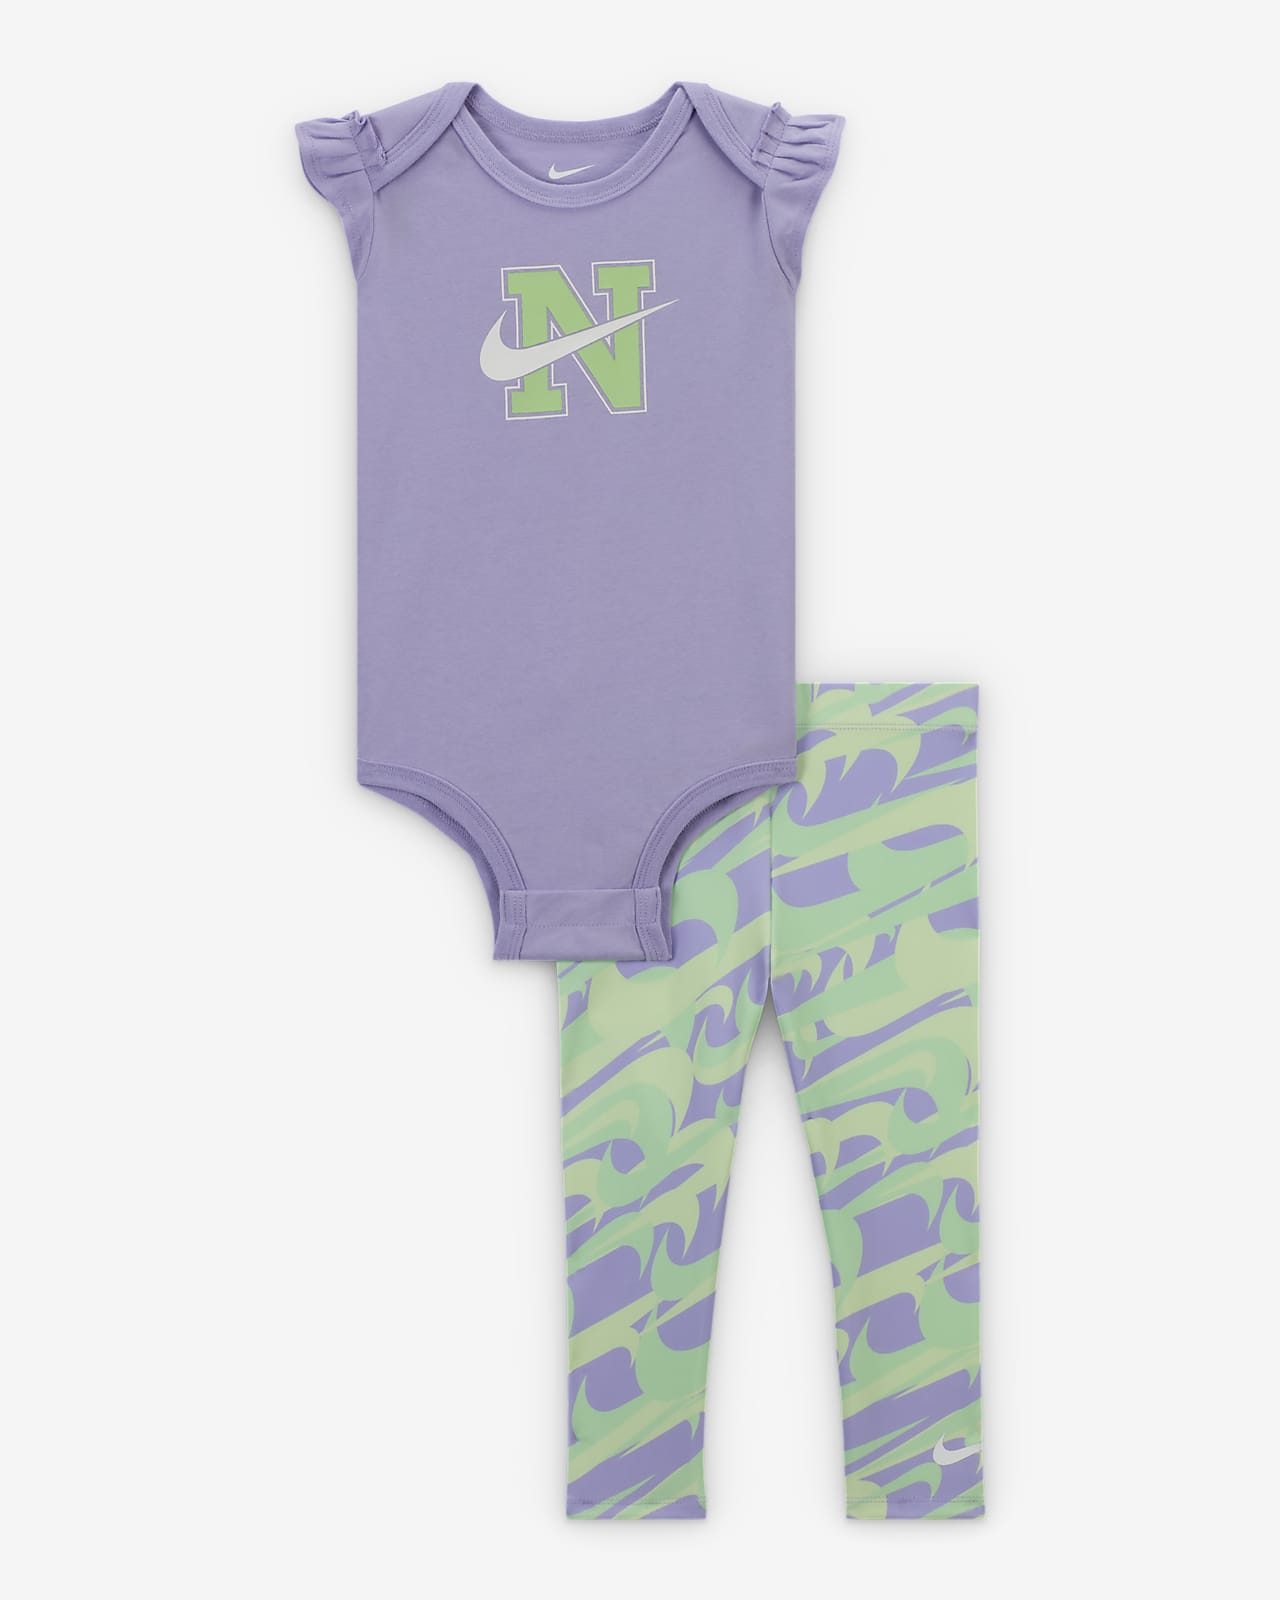 Nike Dri-FIT Prep in Your Step Baby (12-24M) Bodysuit Set